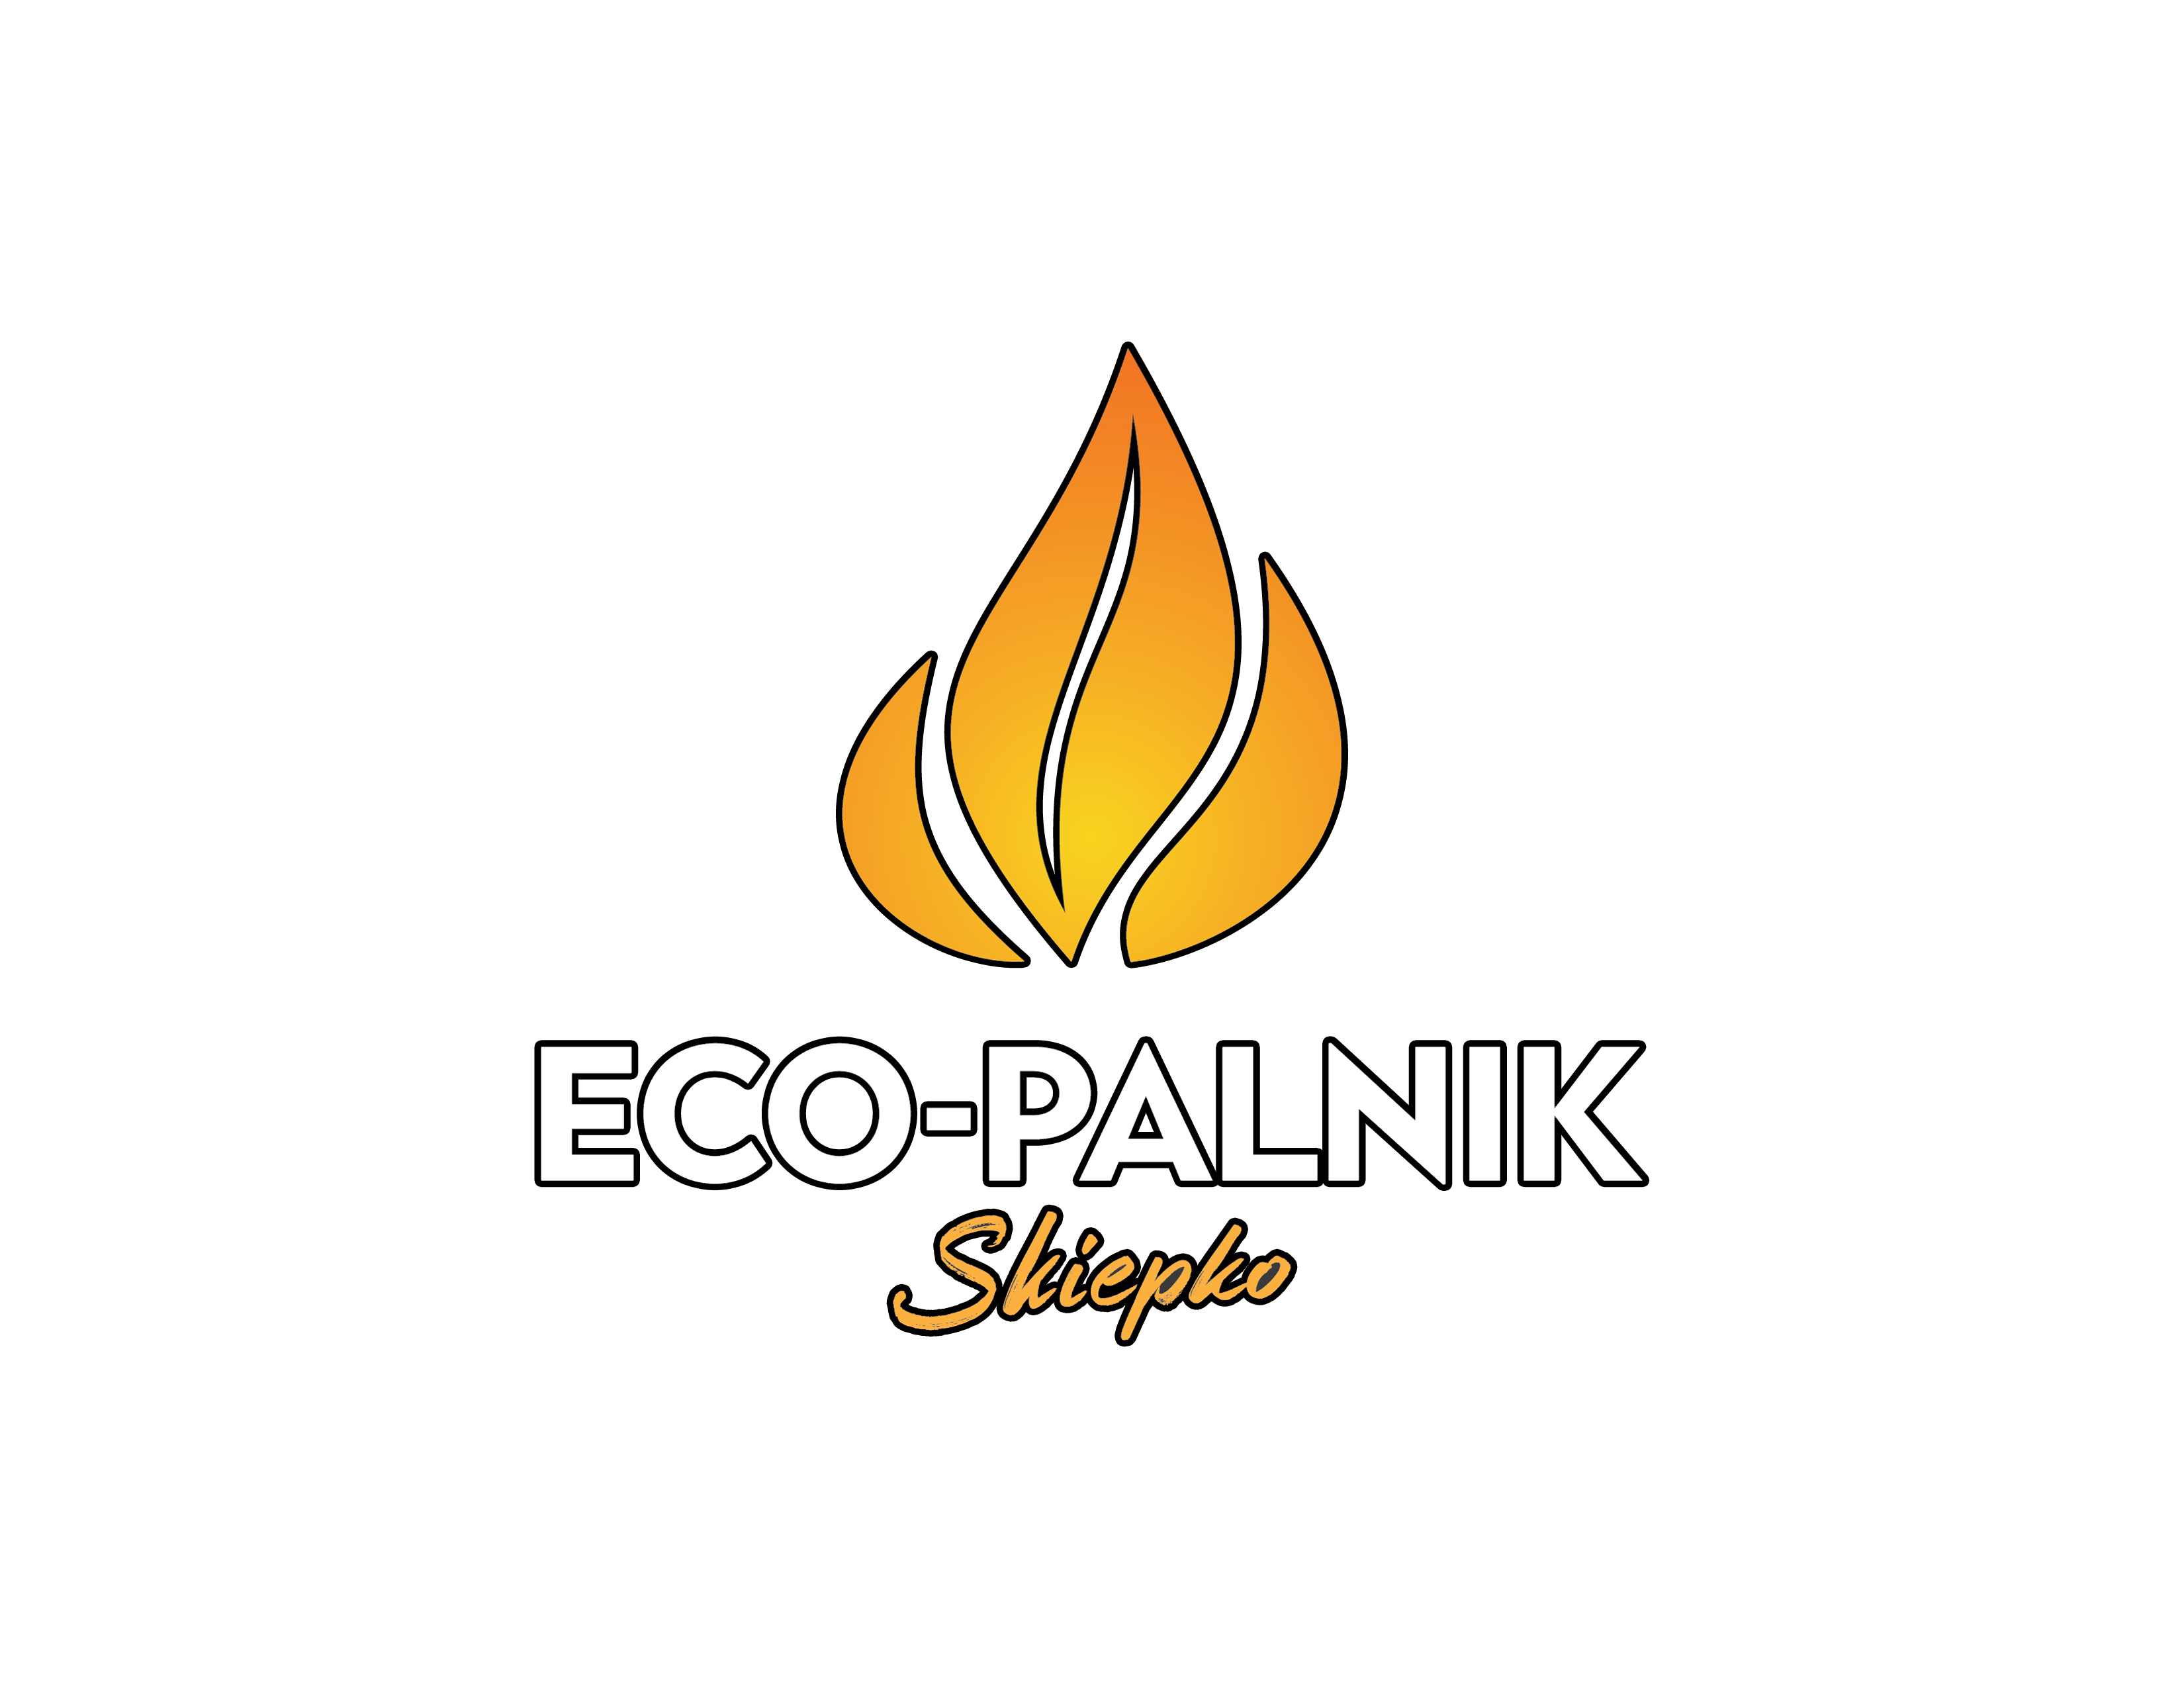 ECO-PALINK logo